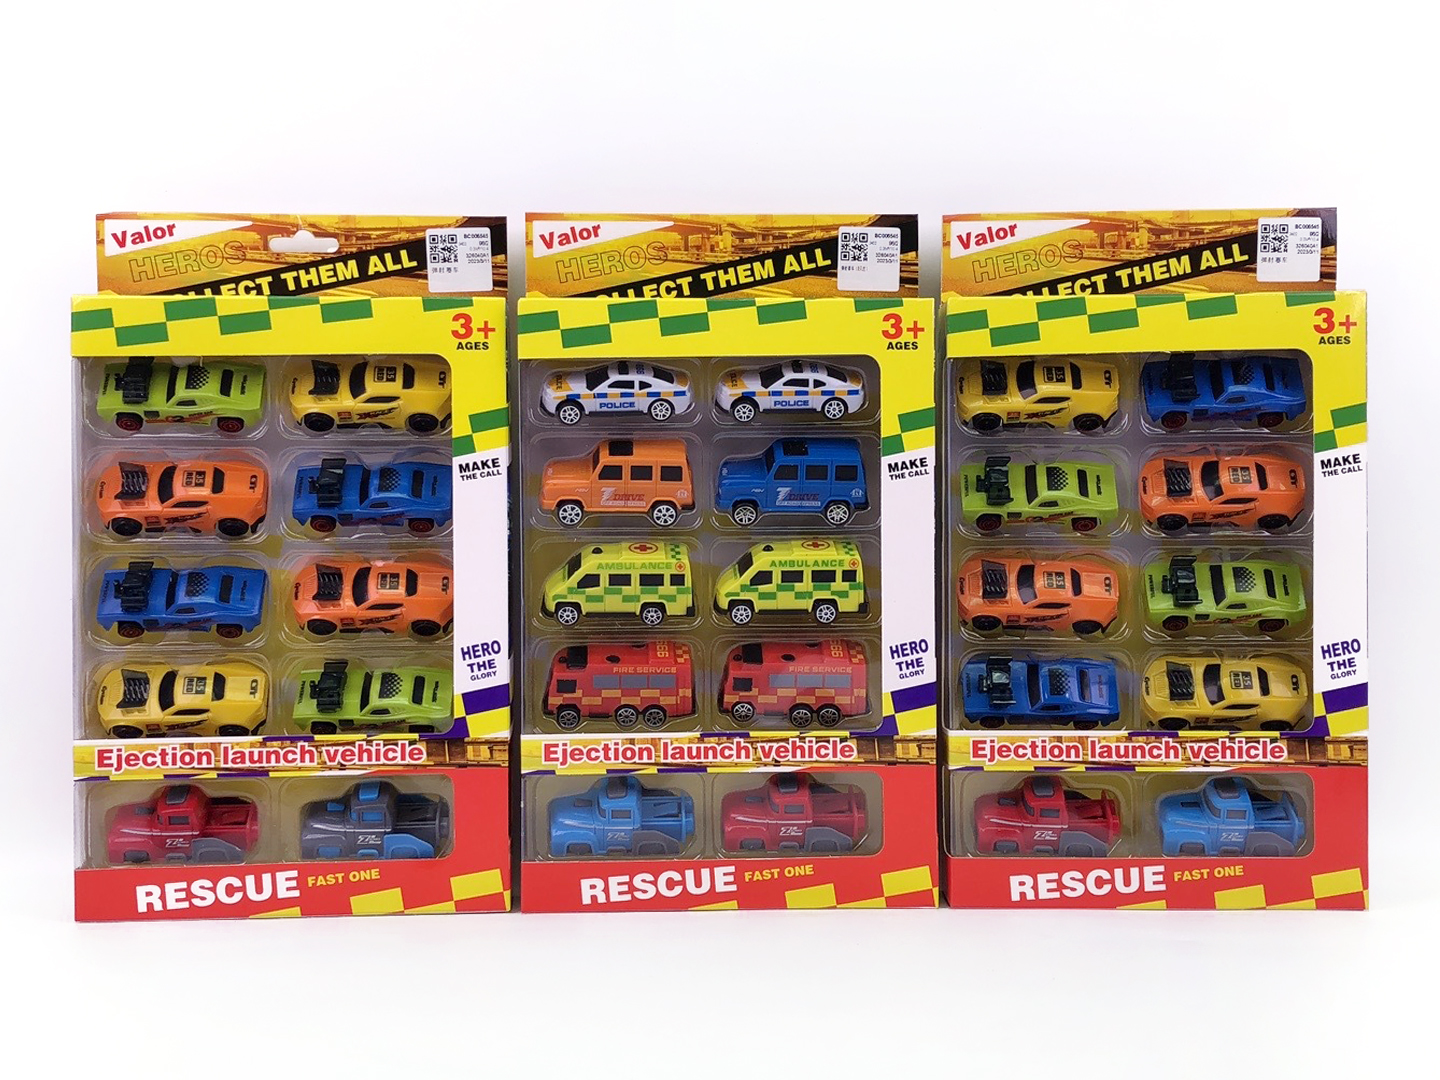 Press Racing Car(8in1) toys